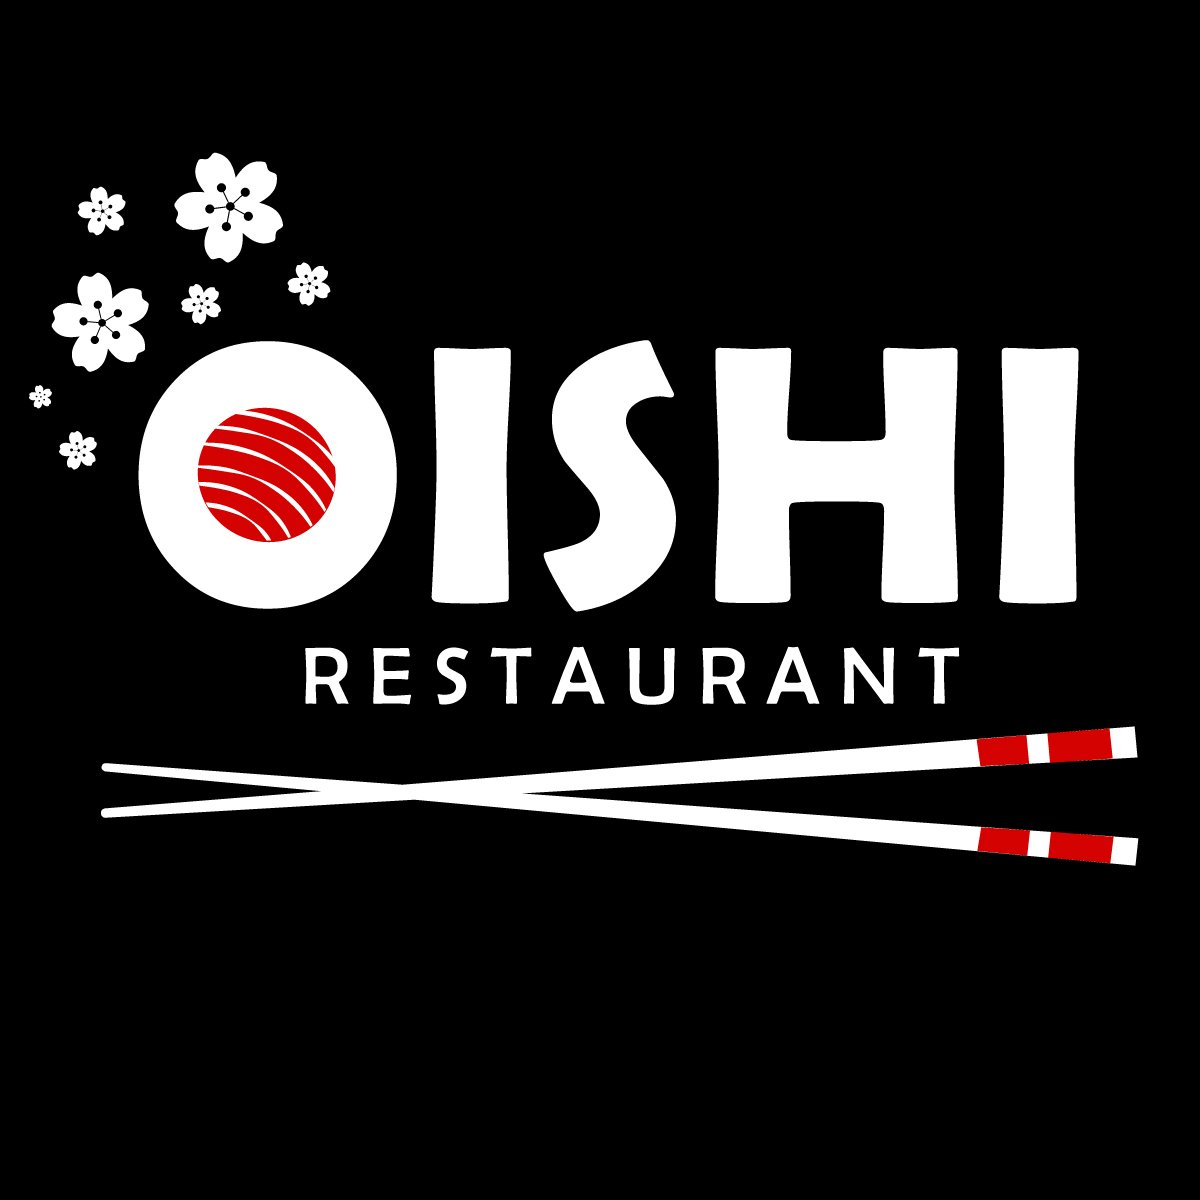 Oishi, Follonica